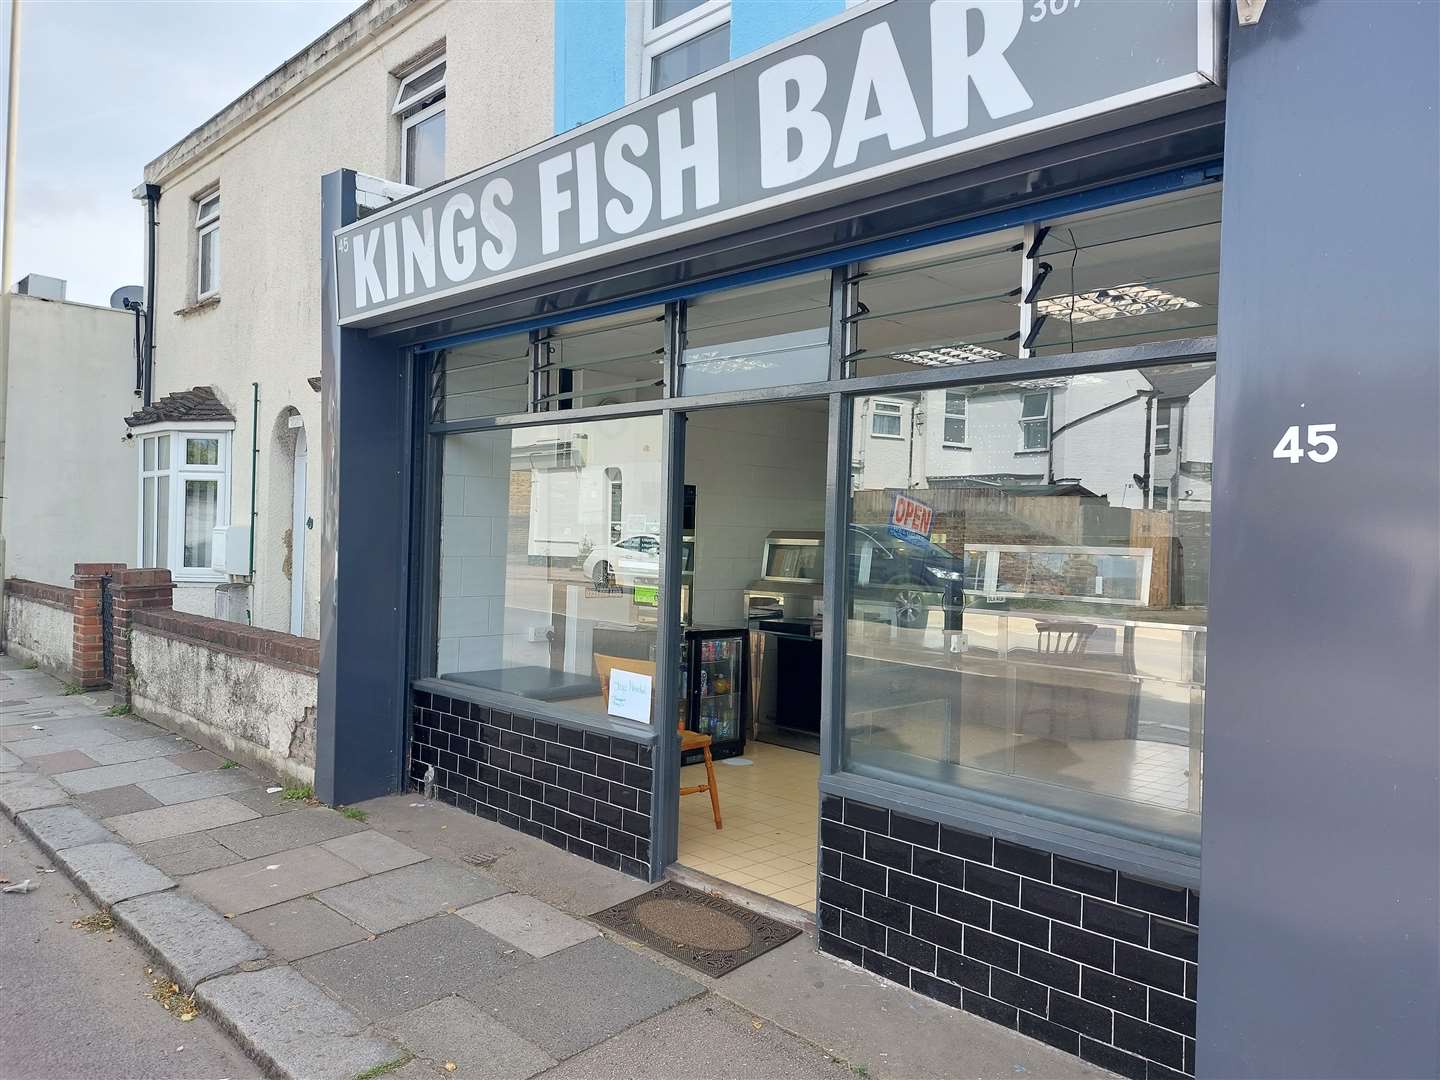 Kings Fish Bar in Herne Bay